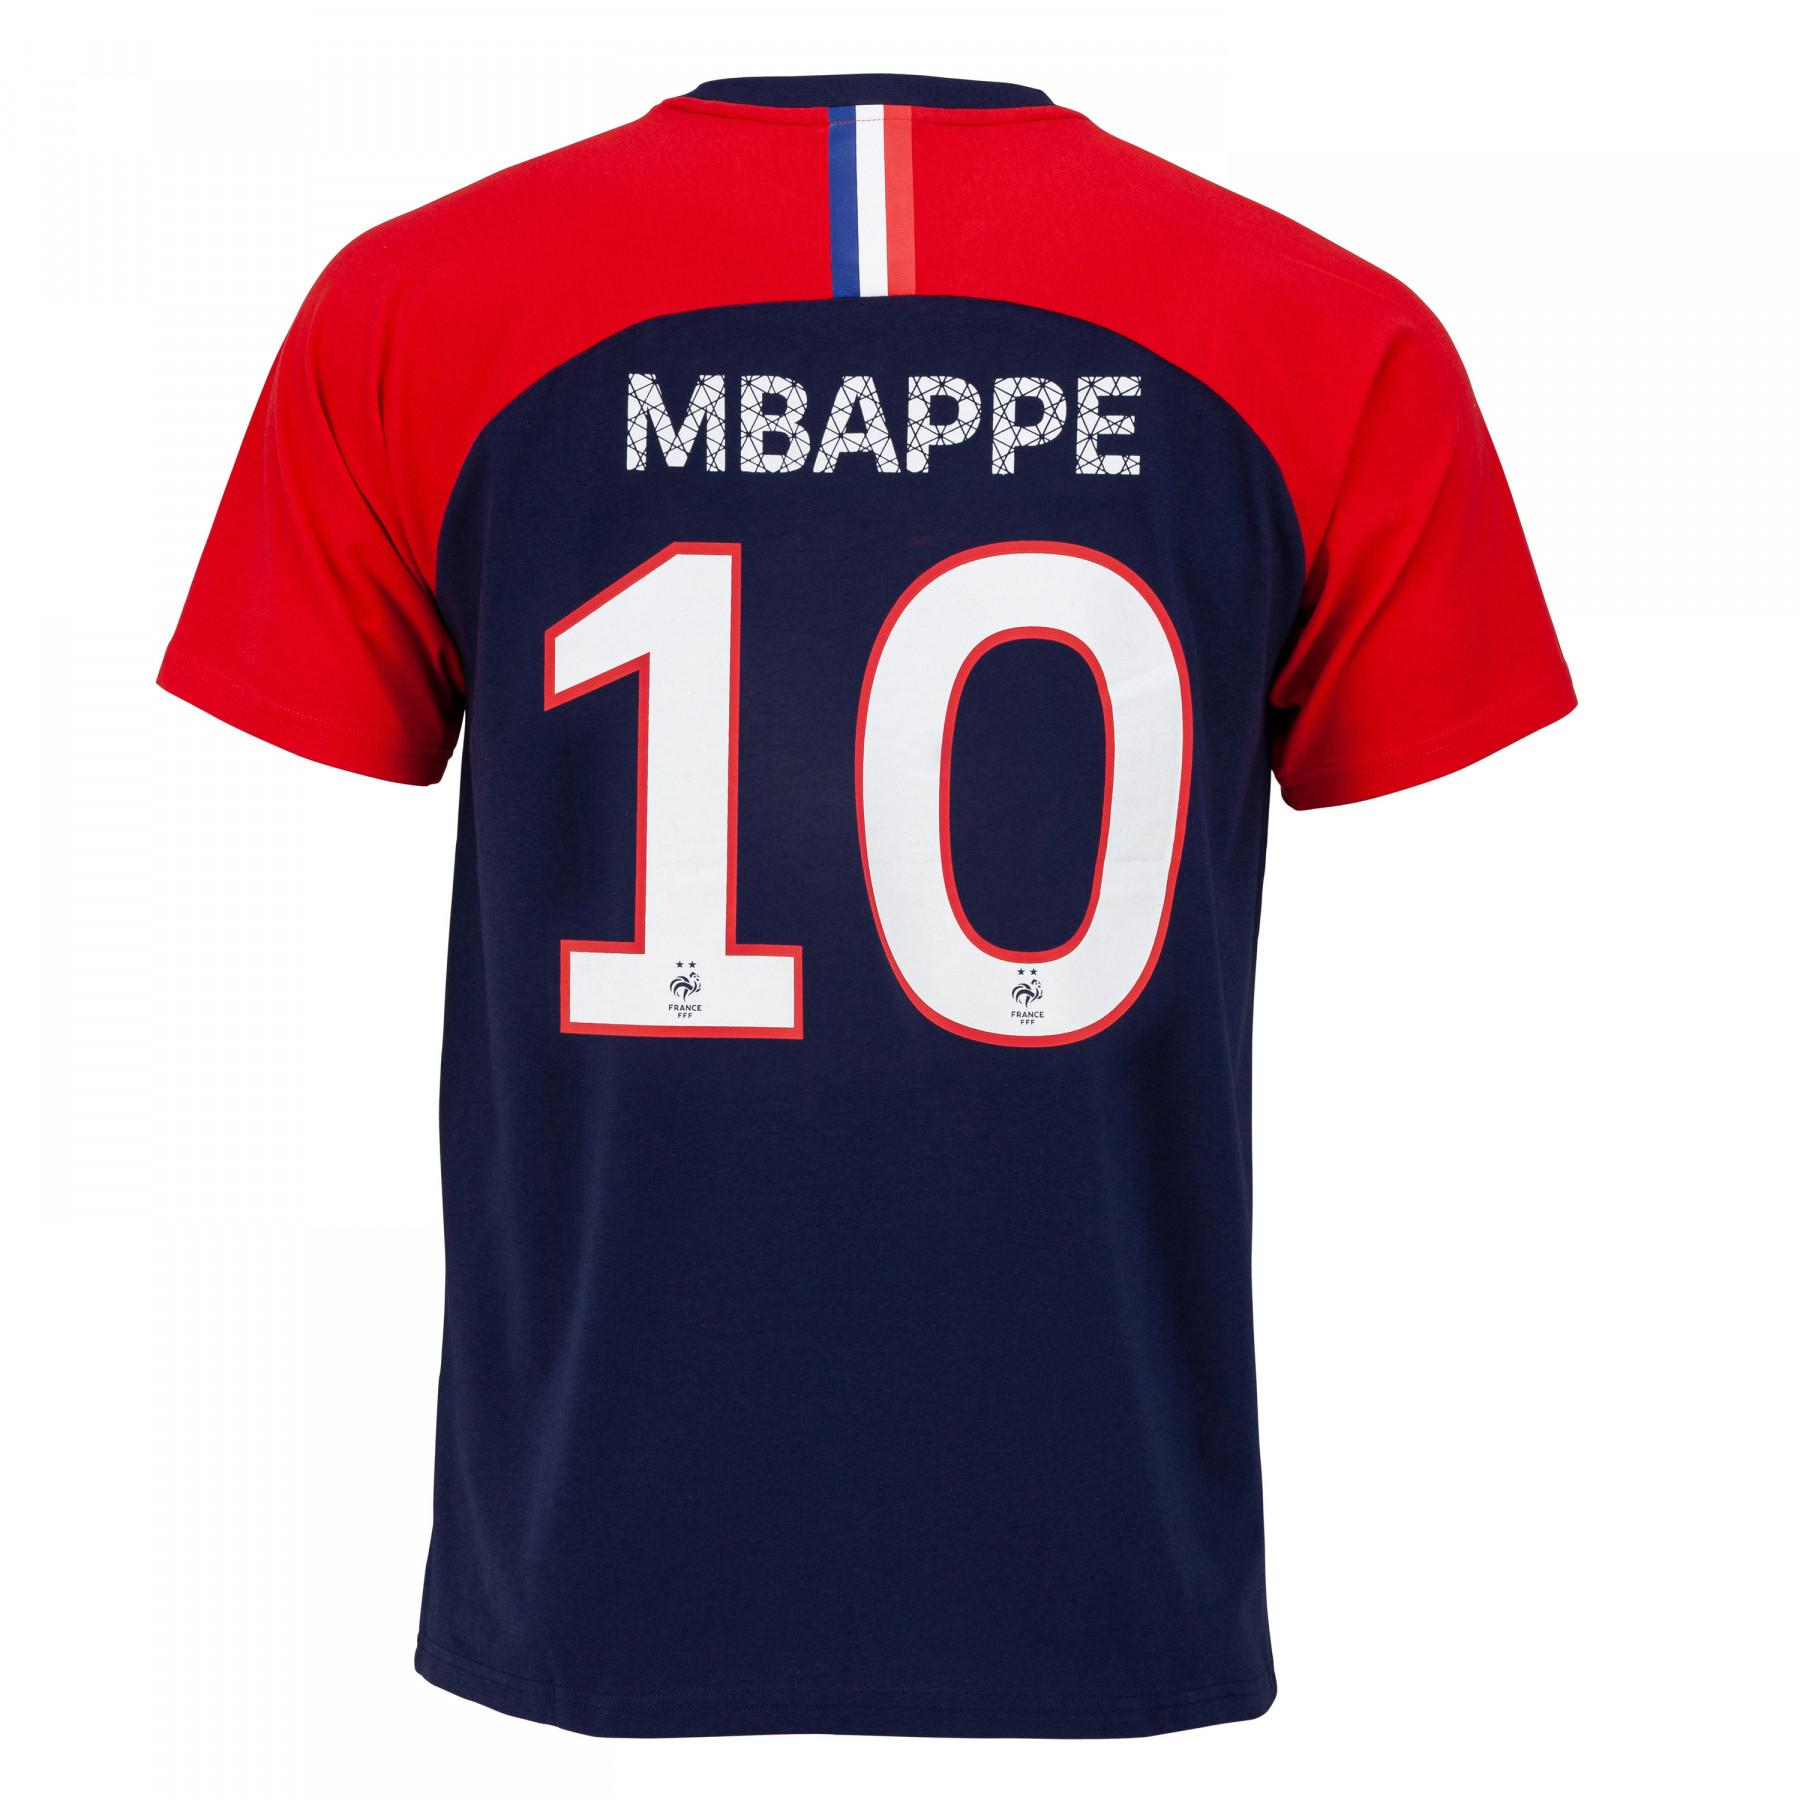 T-shirt kind fff spieler mbappé n°10